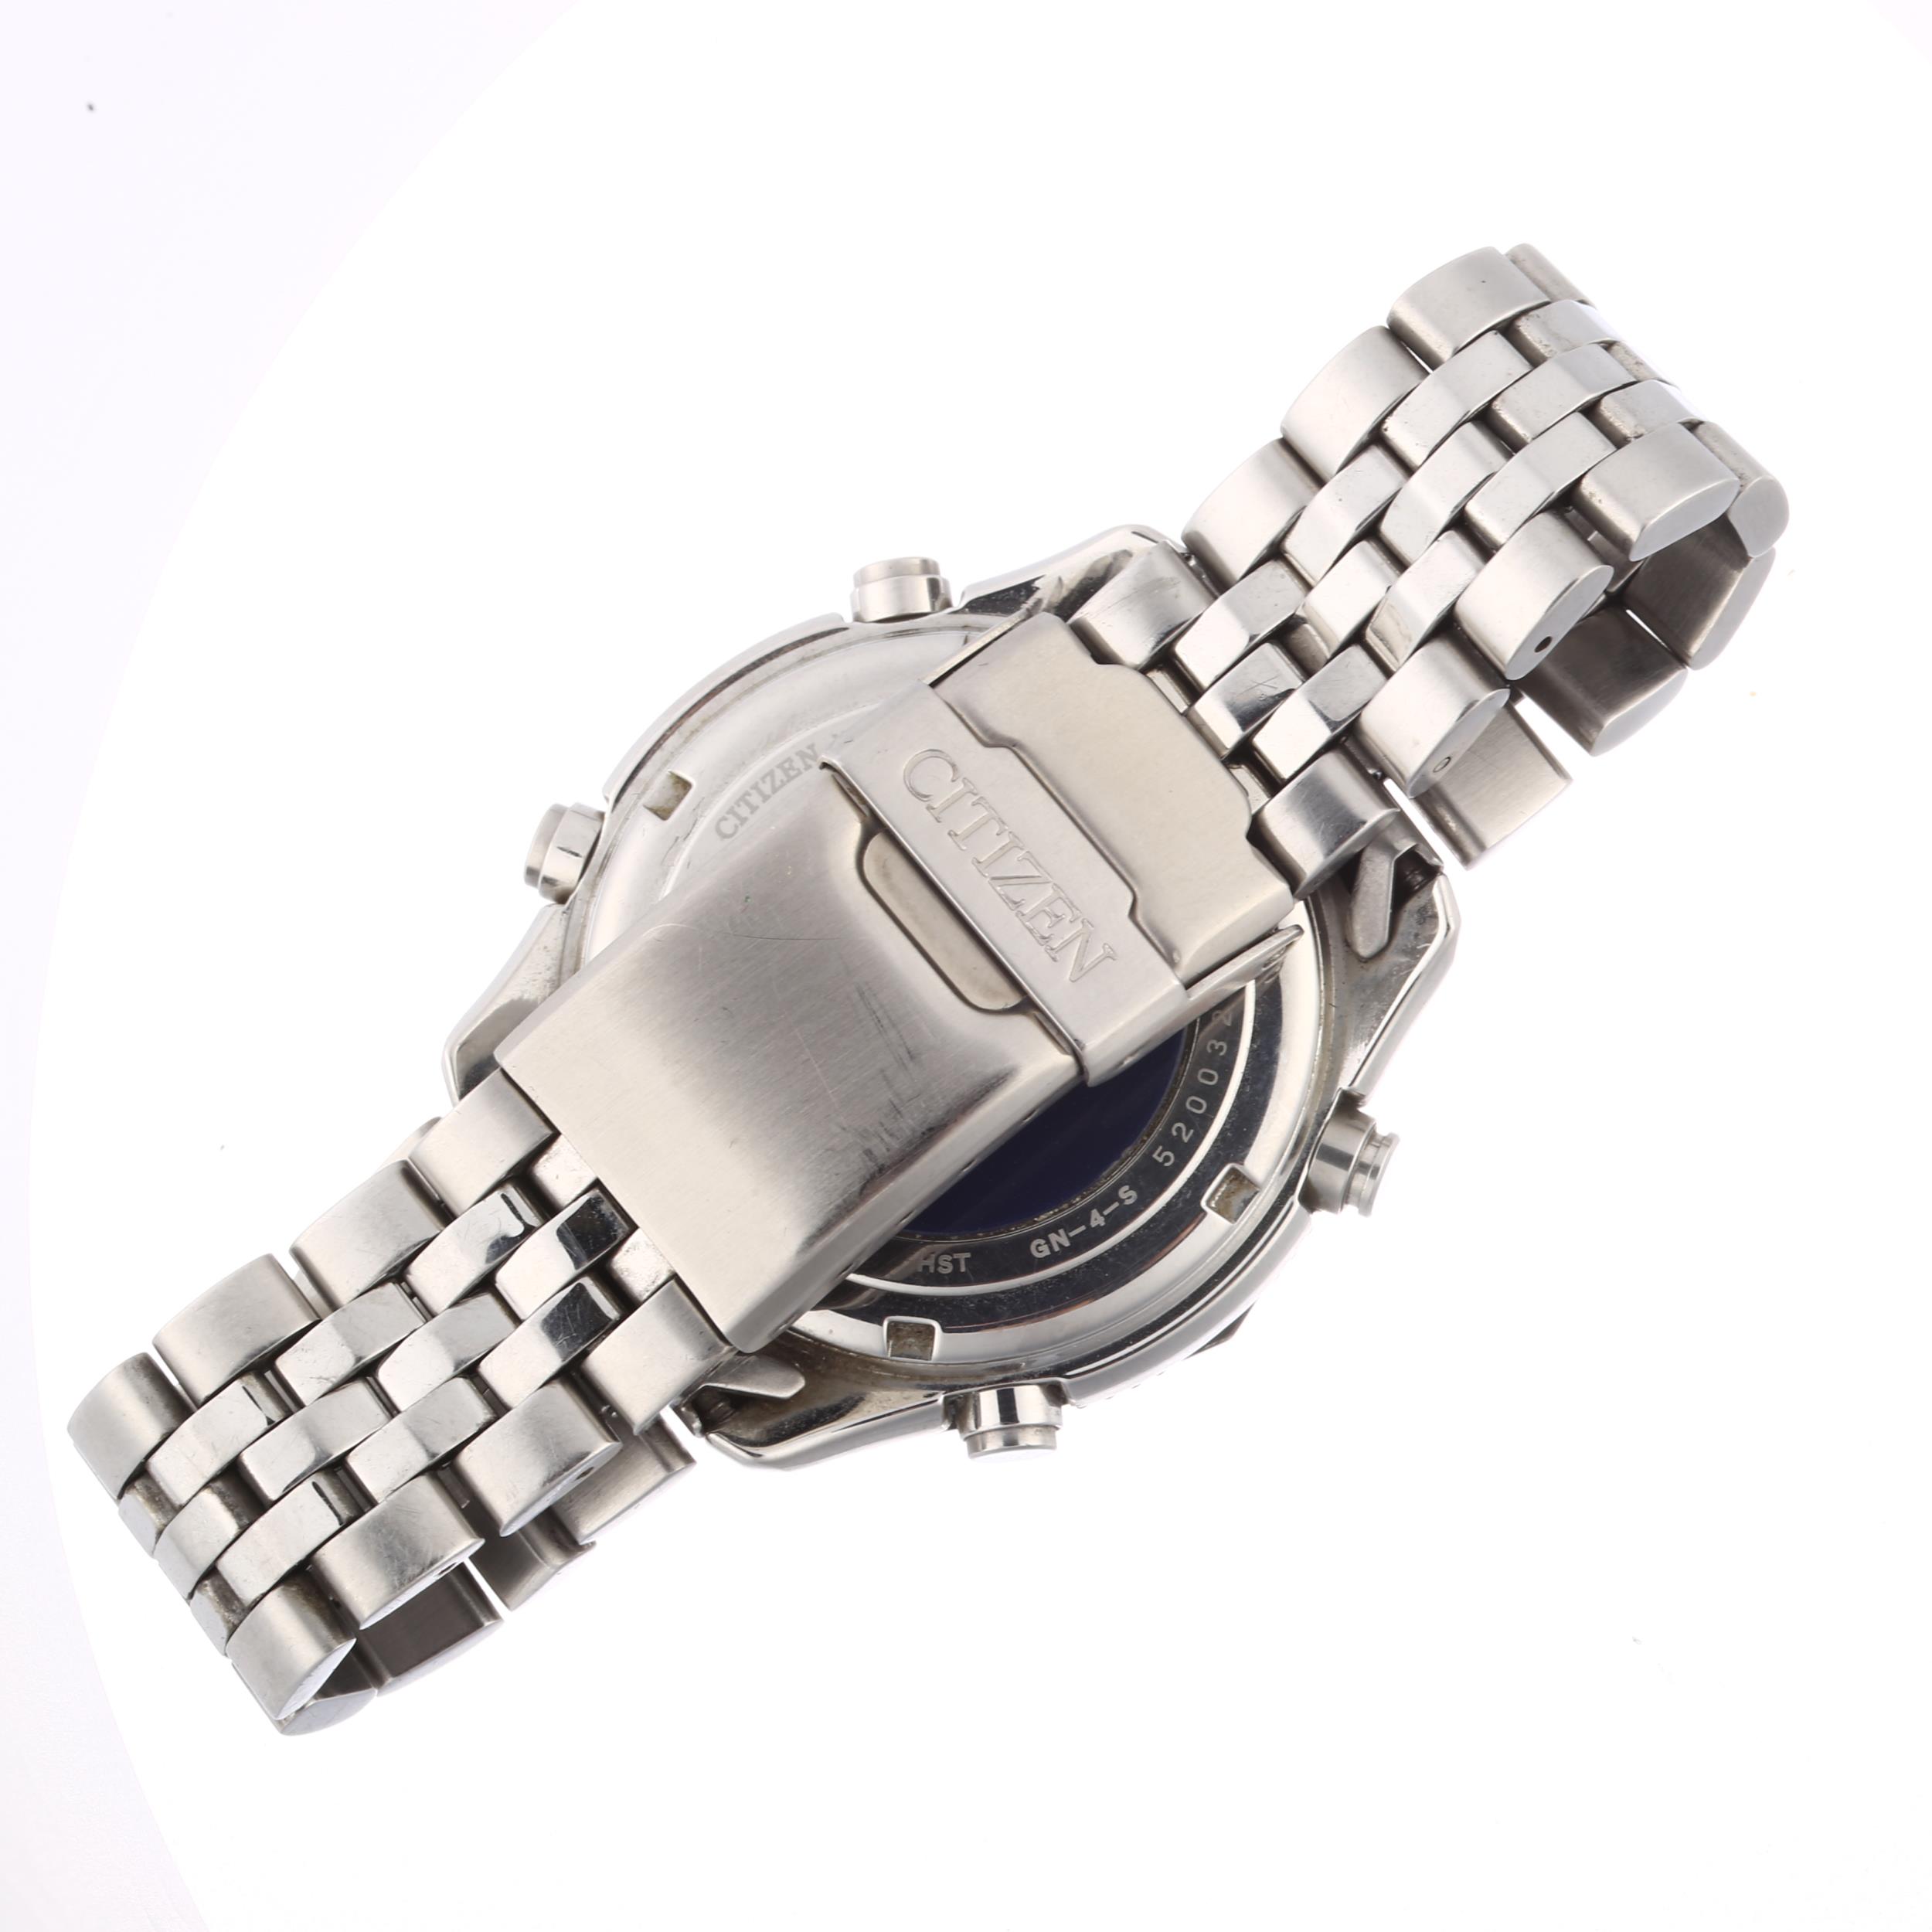 CITIZEN - a stainless steel Navihawk World Time Blue Angels quartz chronograph bracelet watch, - Image 3 of 5